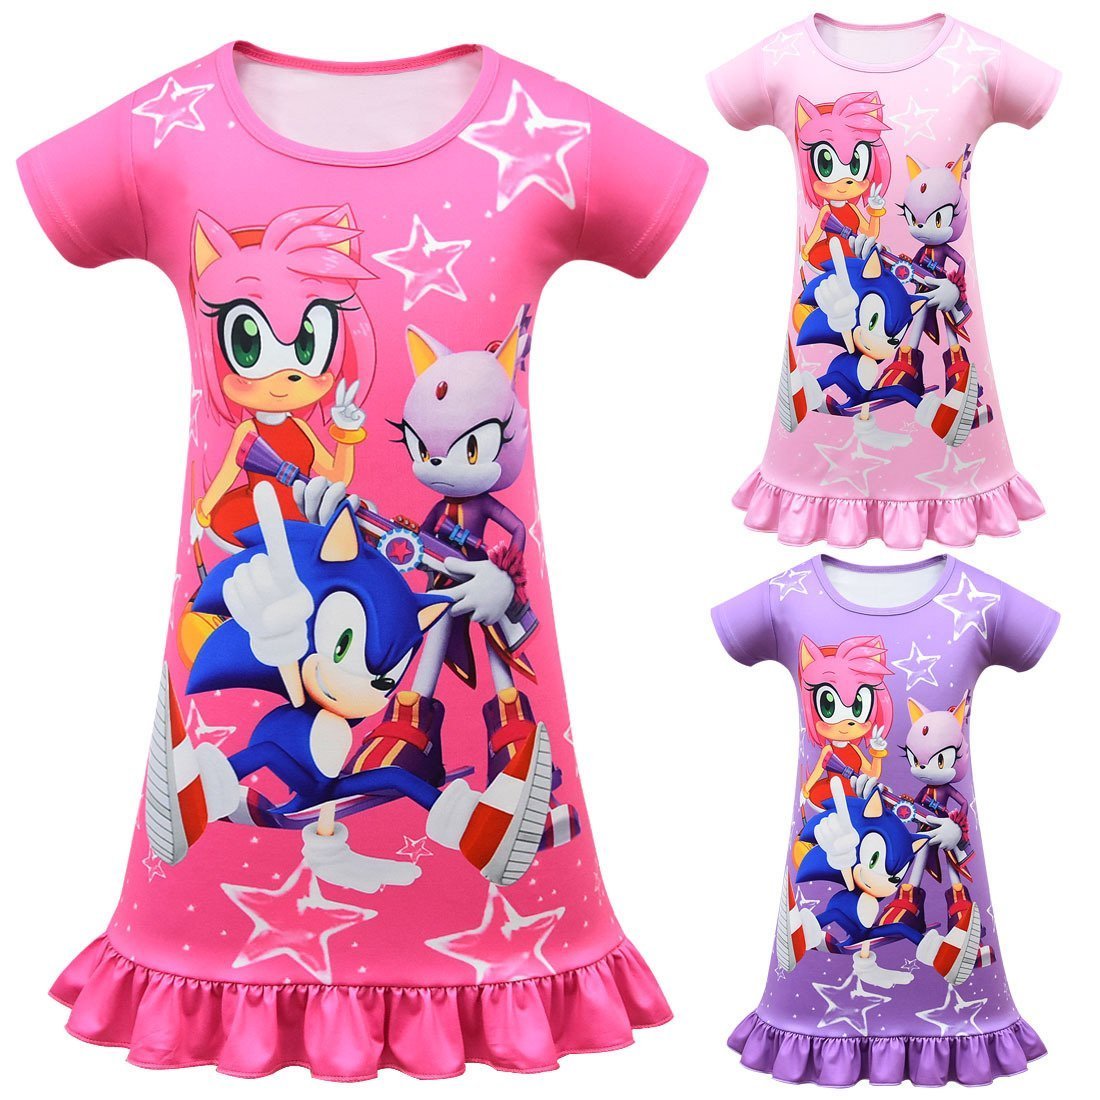 Girls Sonic the Hedgehog Printed Dresses Summer A Line Cartoon Short Sleeve Dresses For Girls